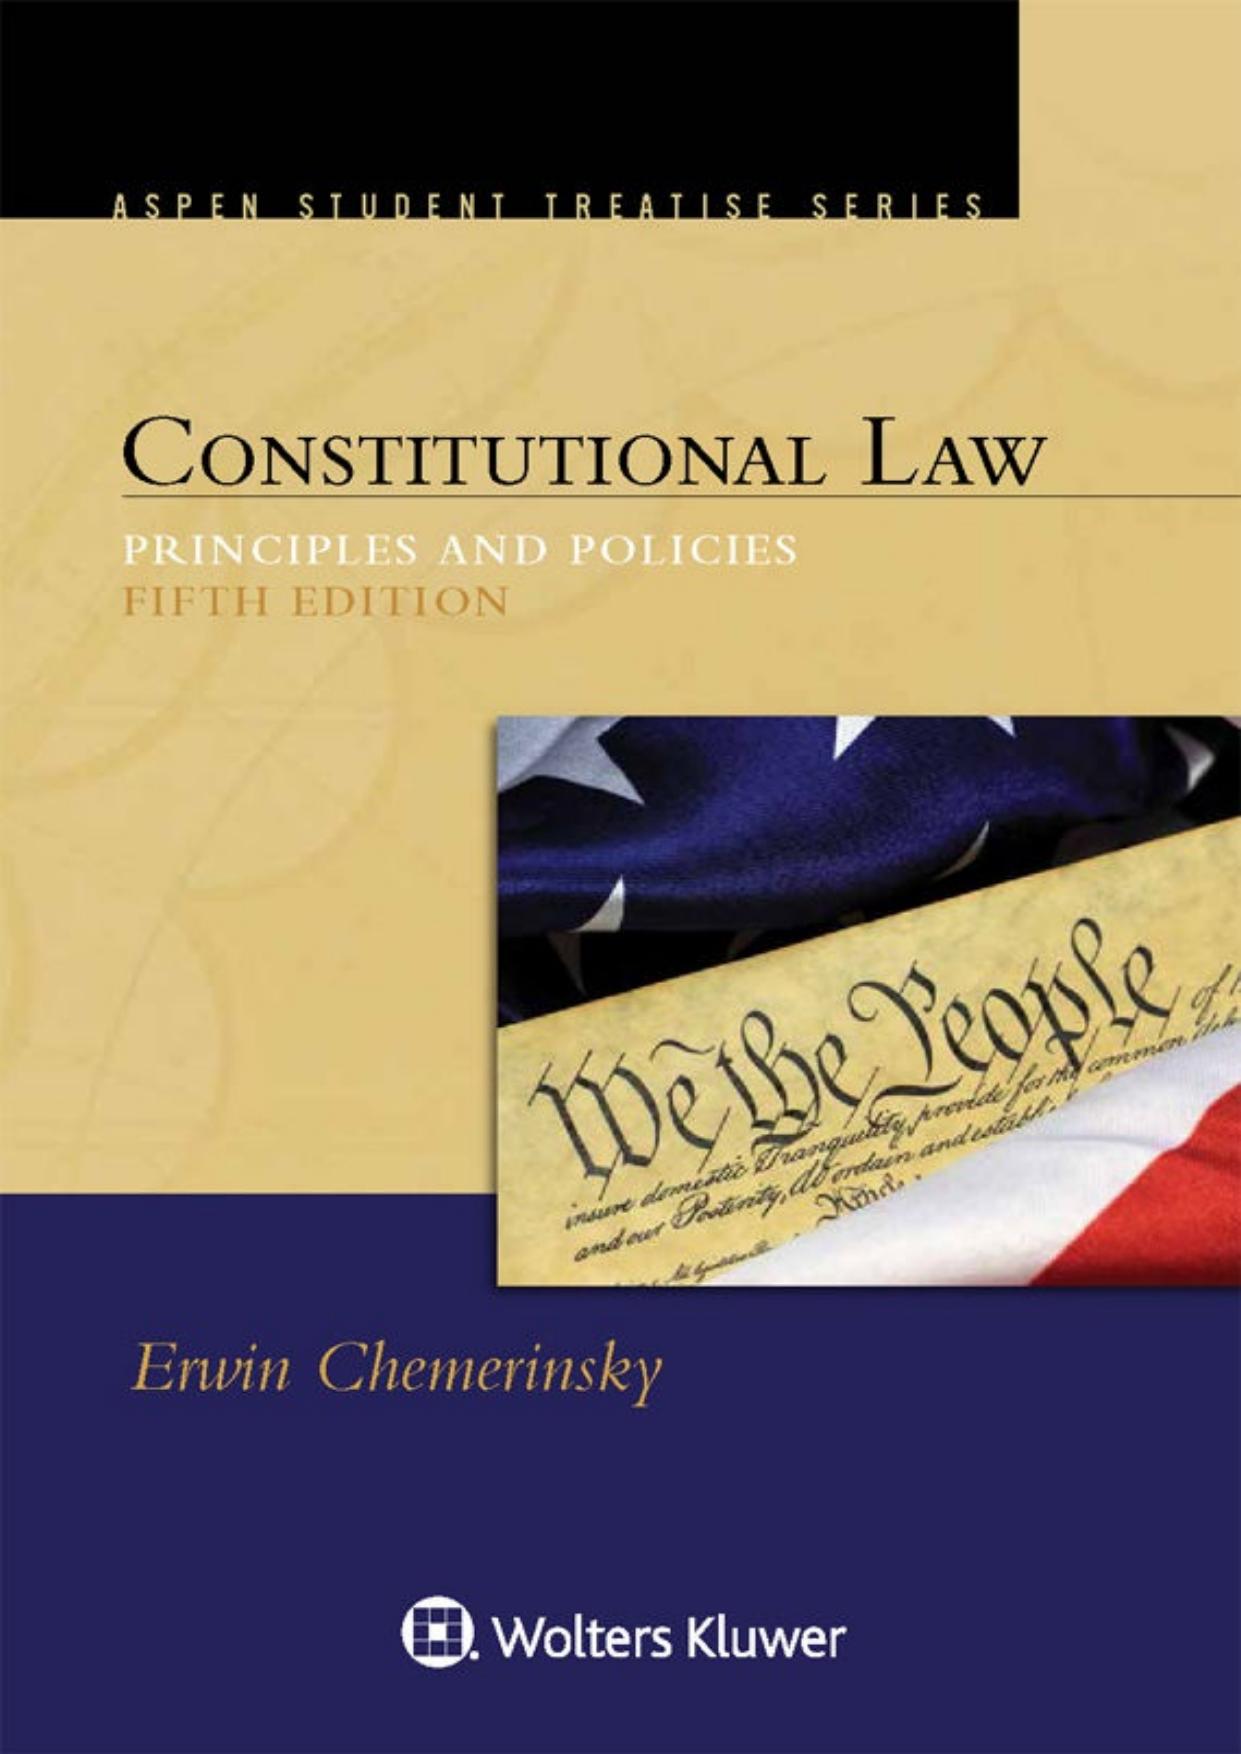 Aspen Student Treatise for Constitutional Law: Principles and Policies (Aspen Student Treatise Series)